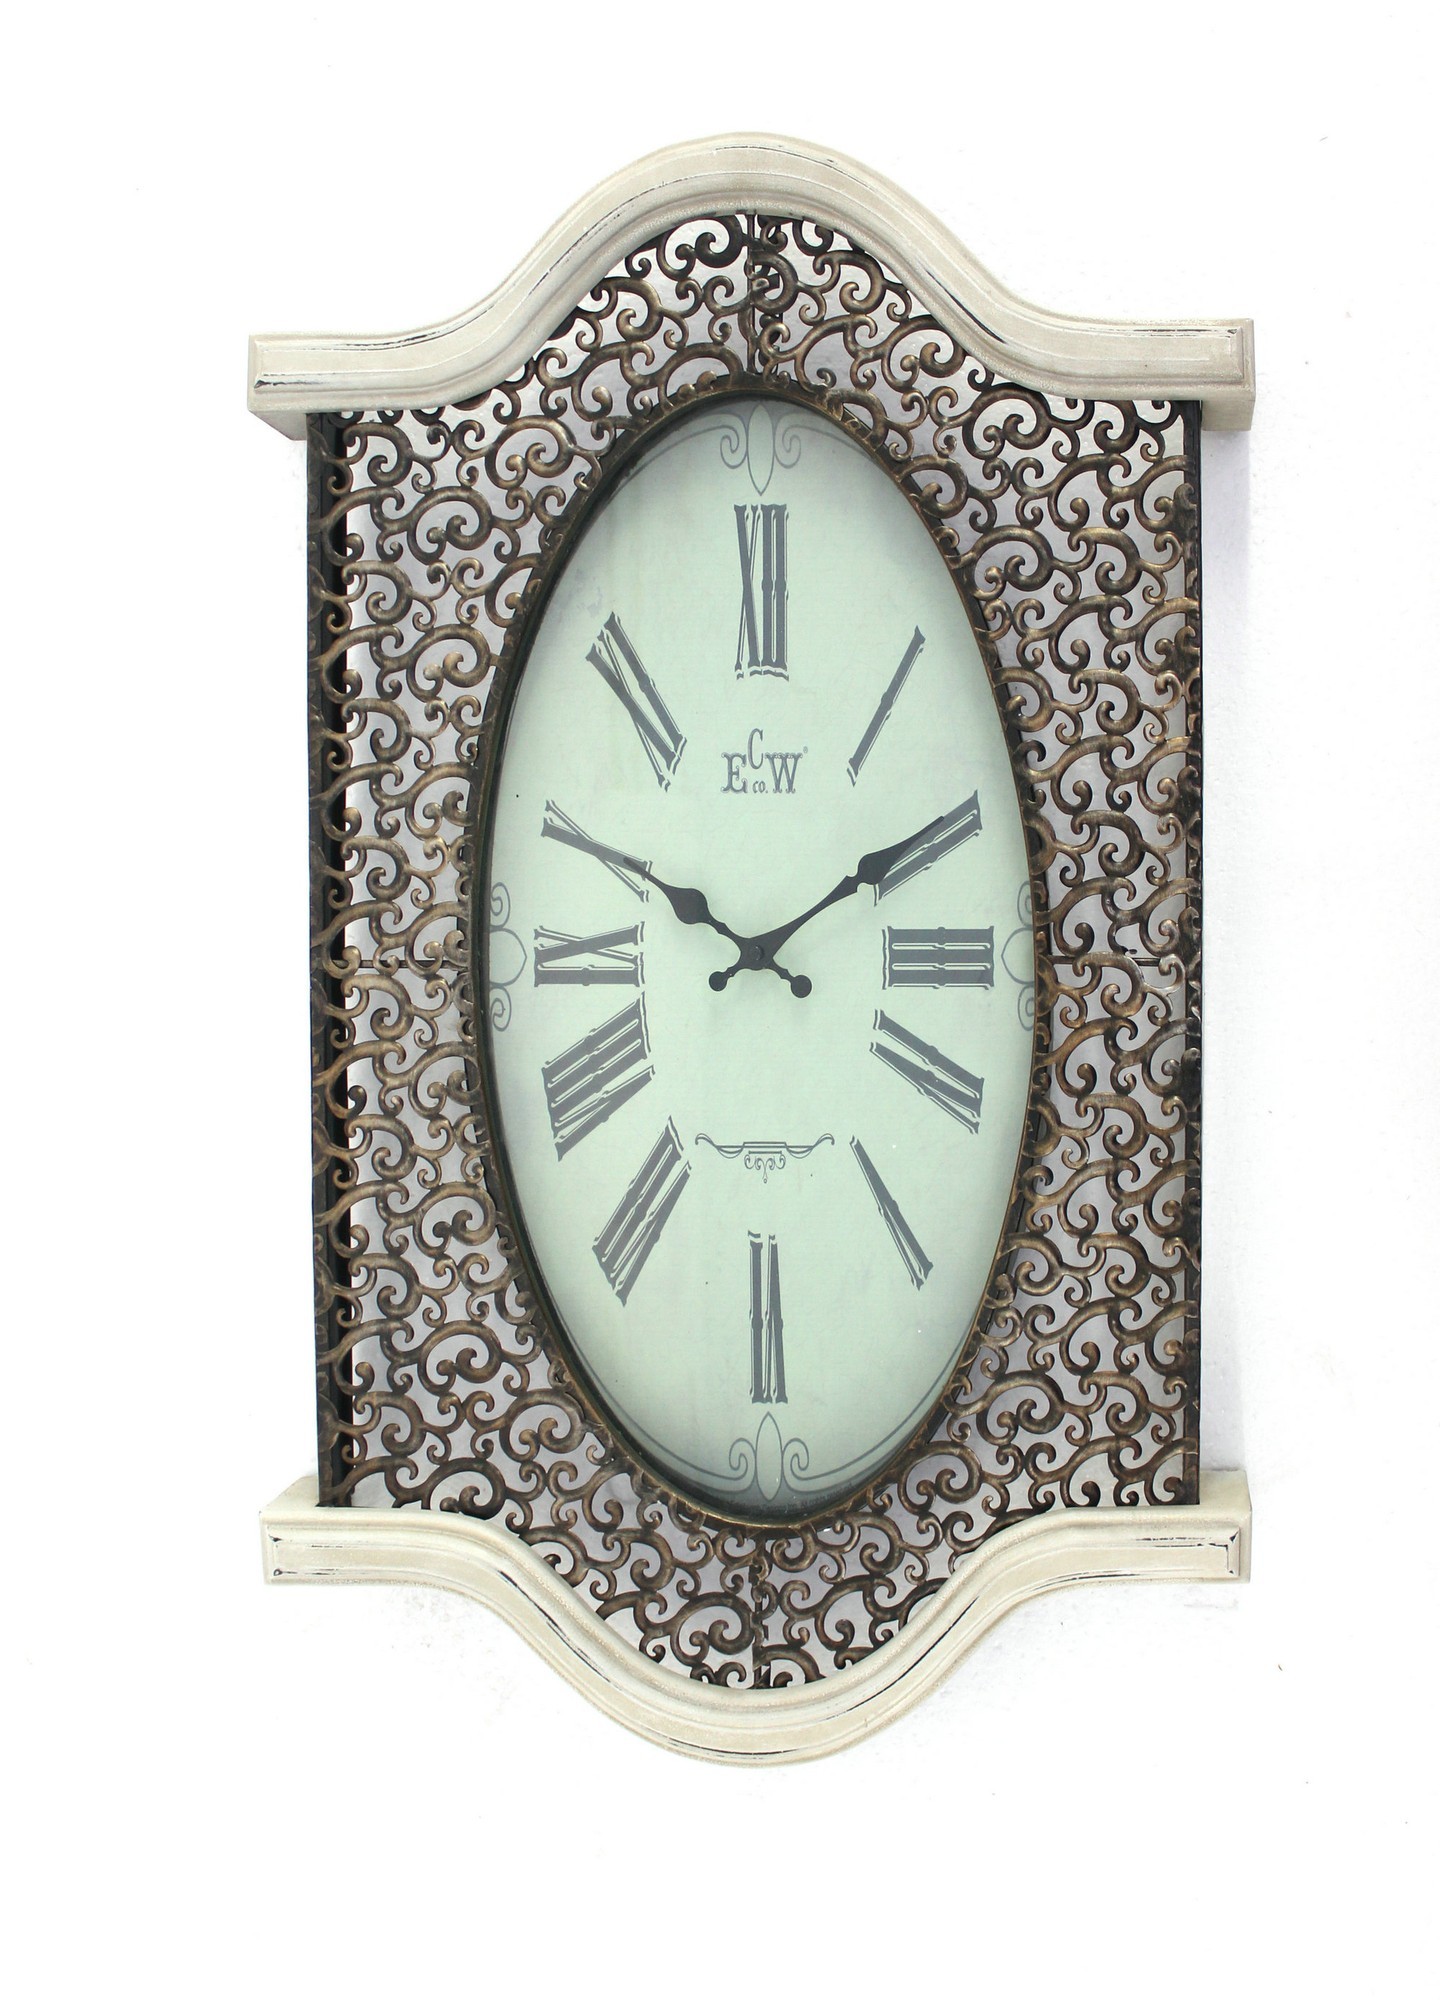 20" x 30.5" x 2.5" Brown & White Vintage Wall Clock